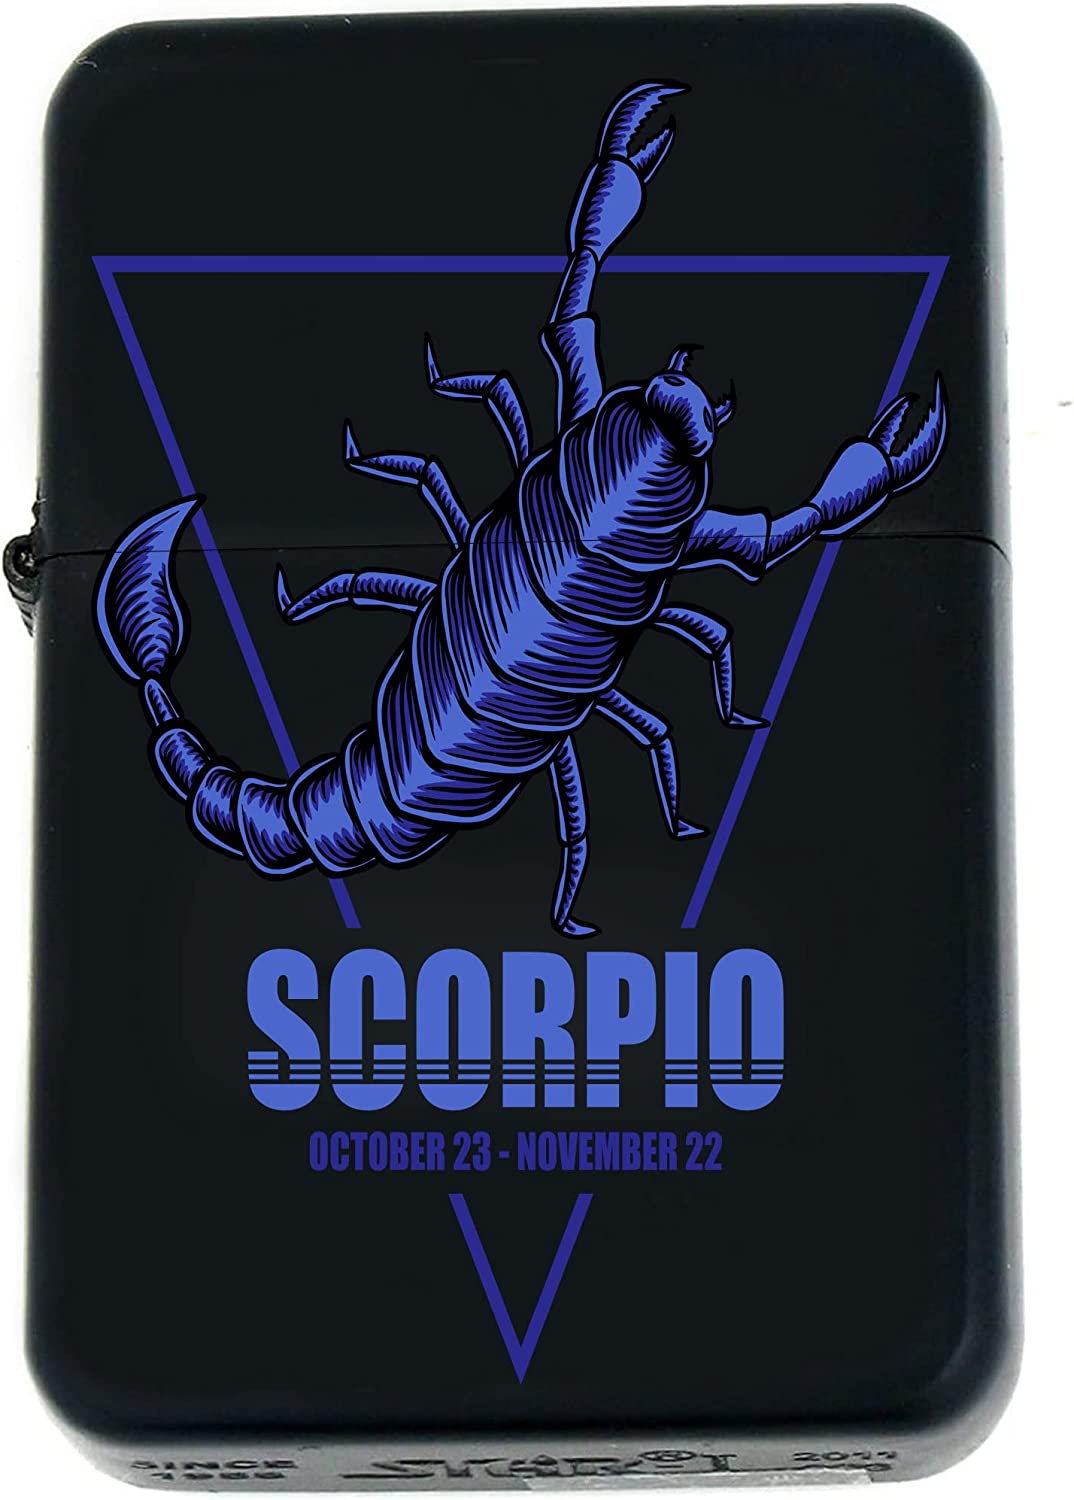 GIFTS INFINITY-Personalized Birthday Zodiac Signs Windproof Lighters-Black Matt (Scorpio 2)